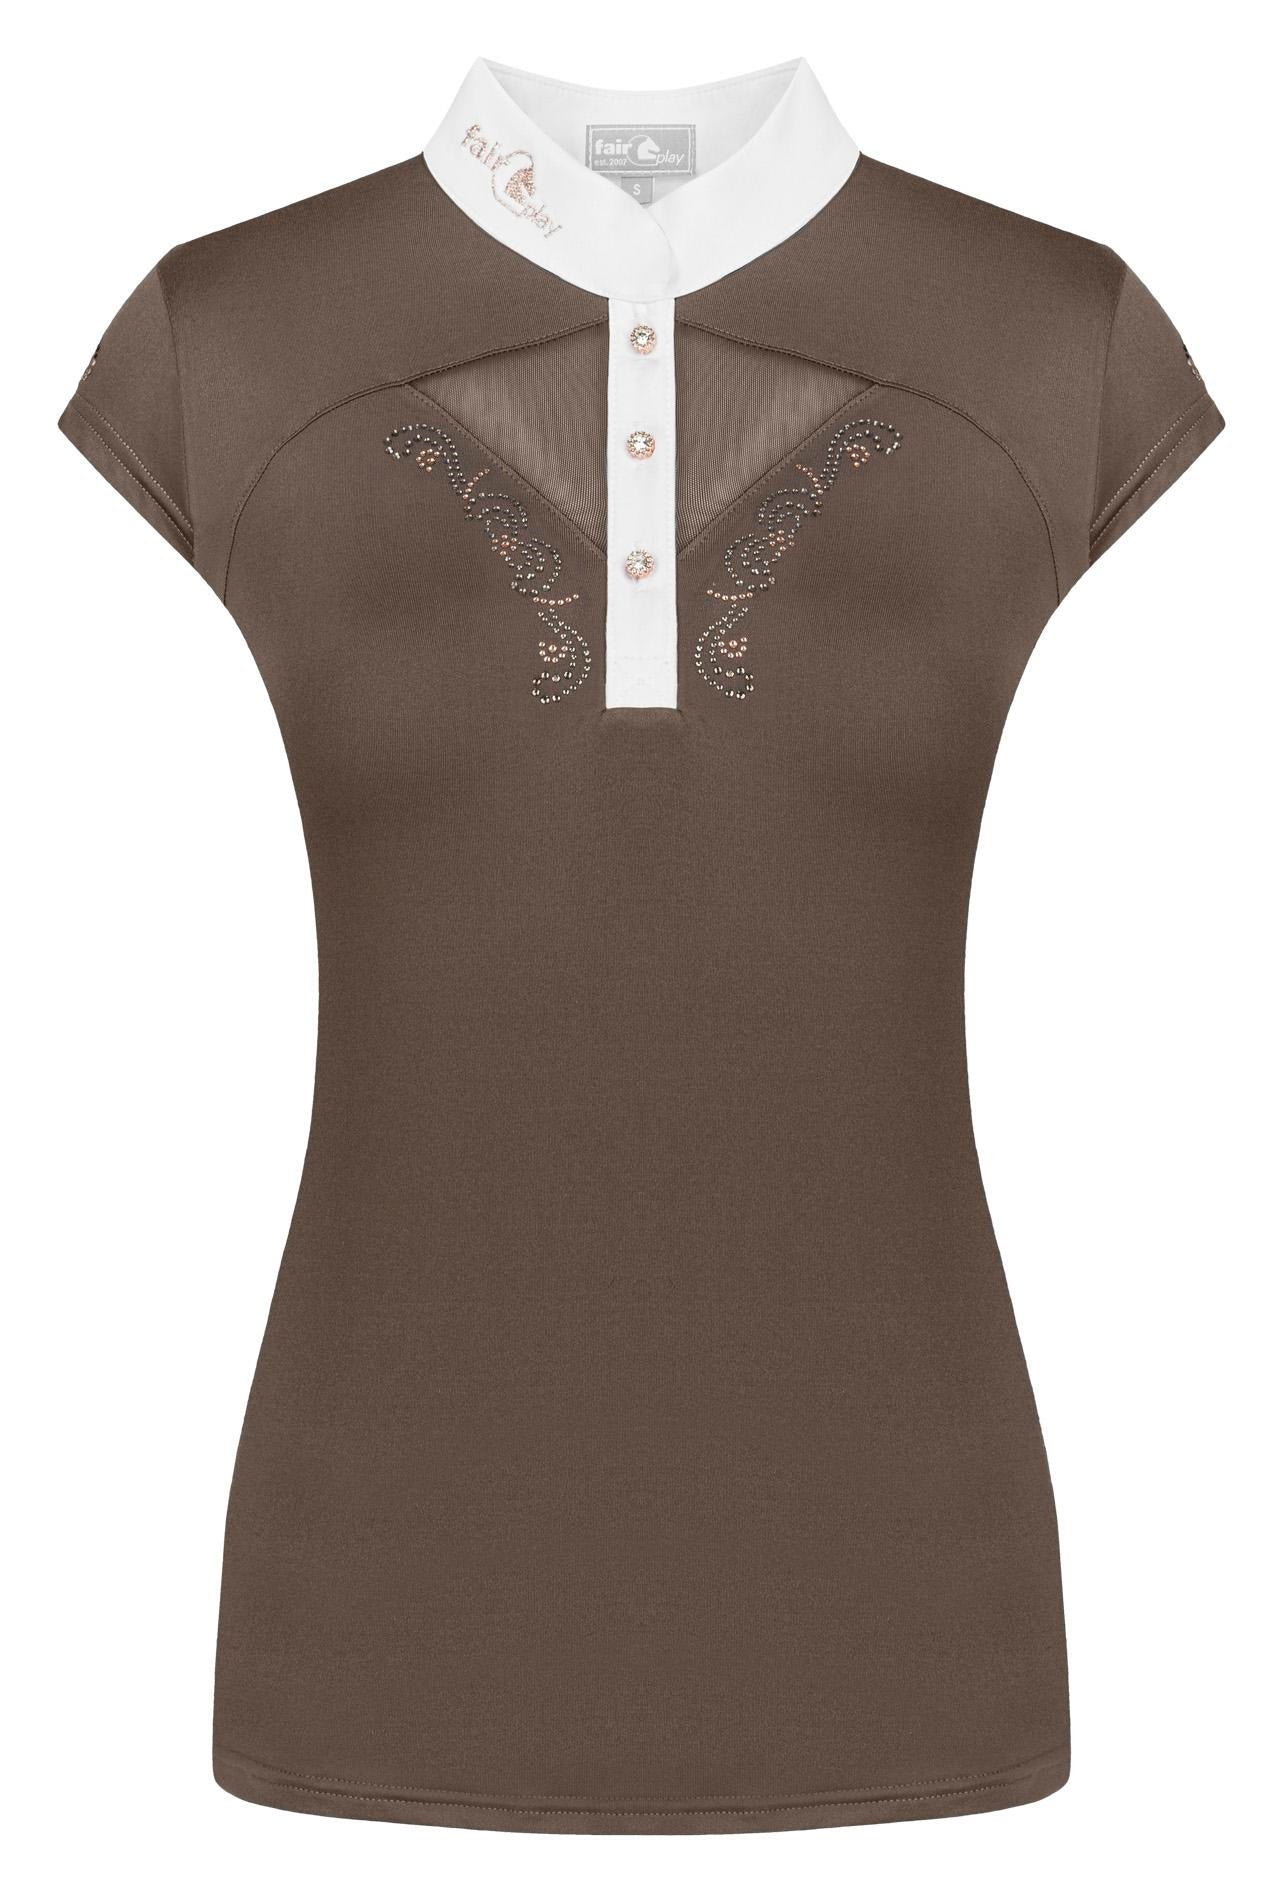 Fairplay Cathrine Rosegold Sleeveless Competition Shirt